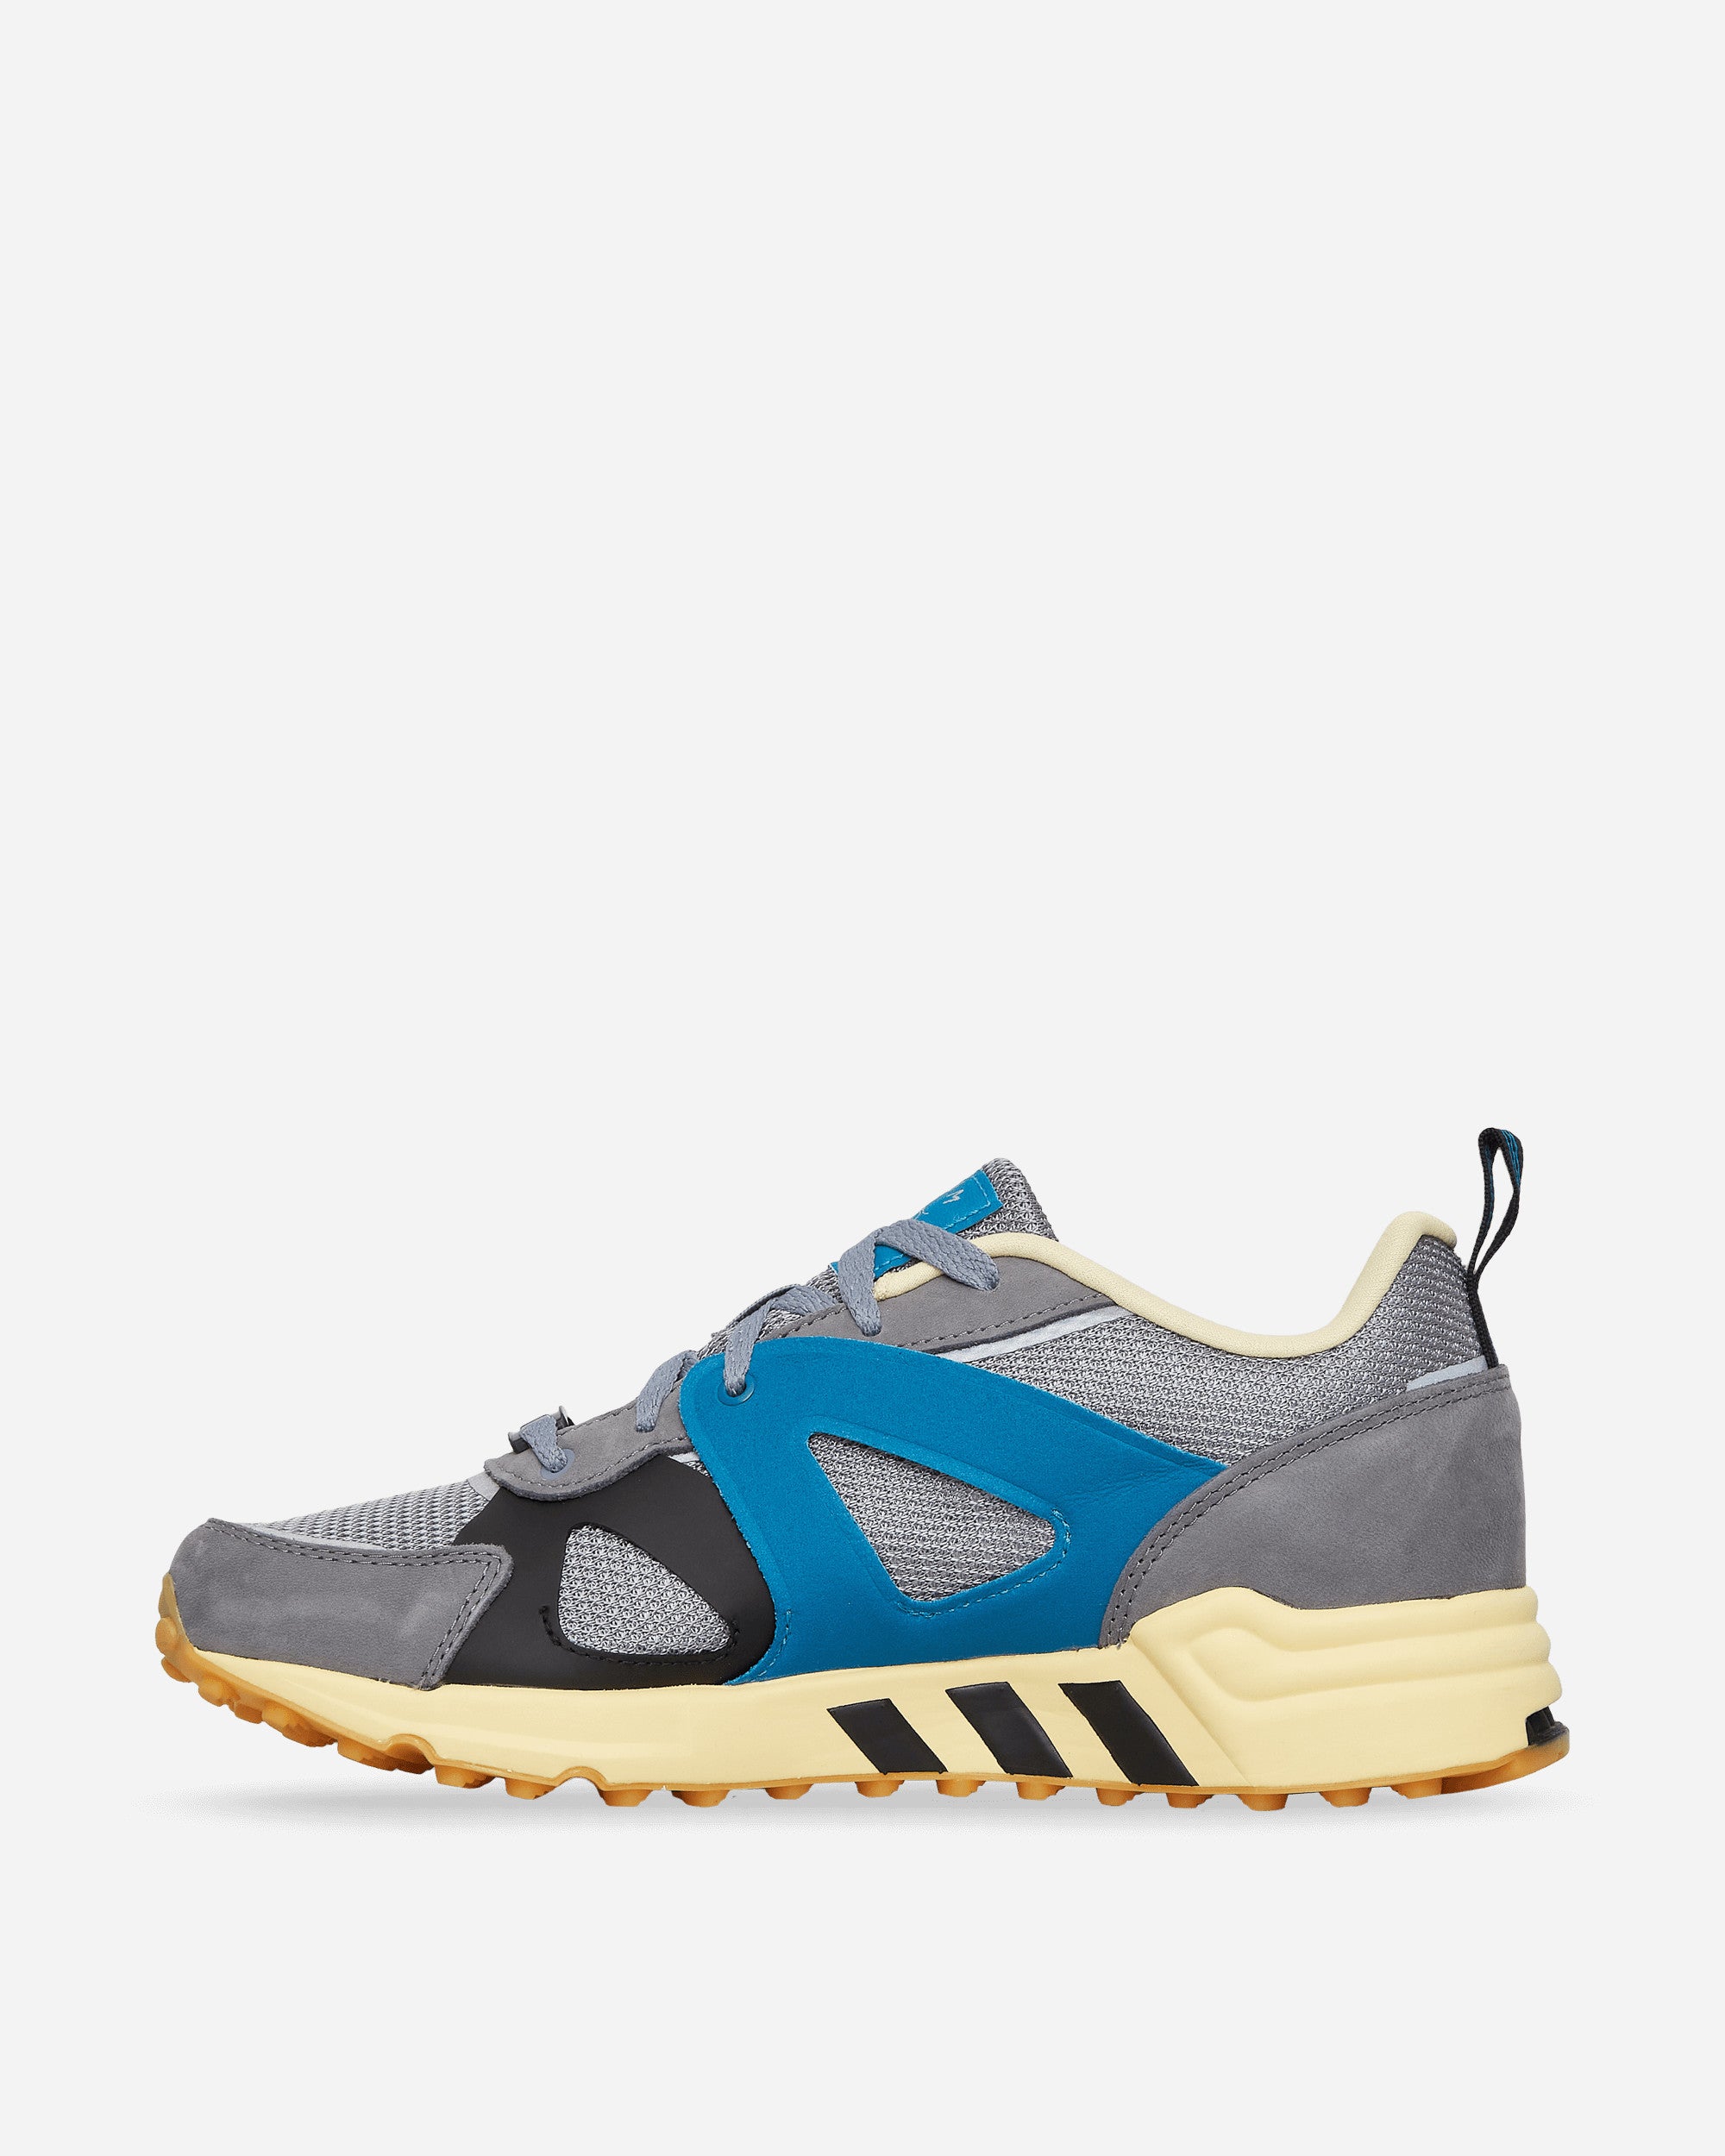 adidas Consortium Equipment Proto Grey/Blue Sneakers Low GX3970